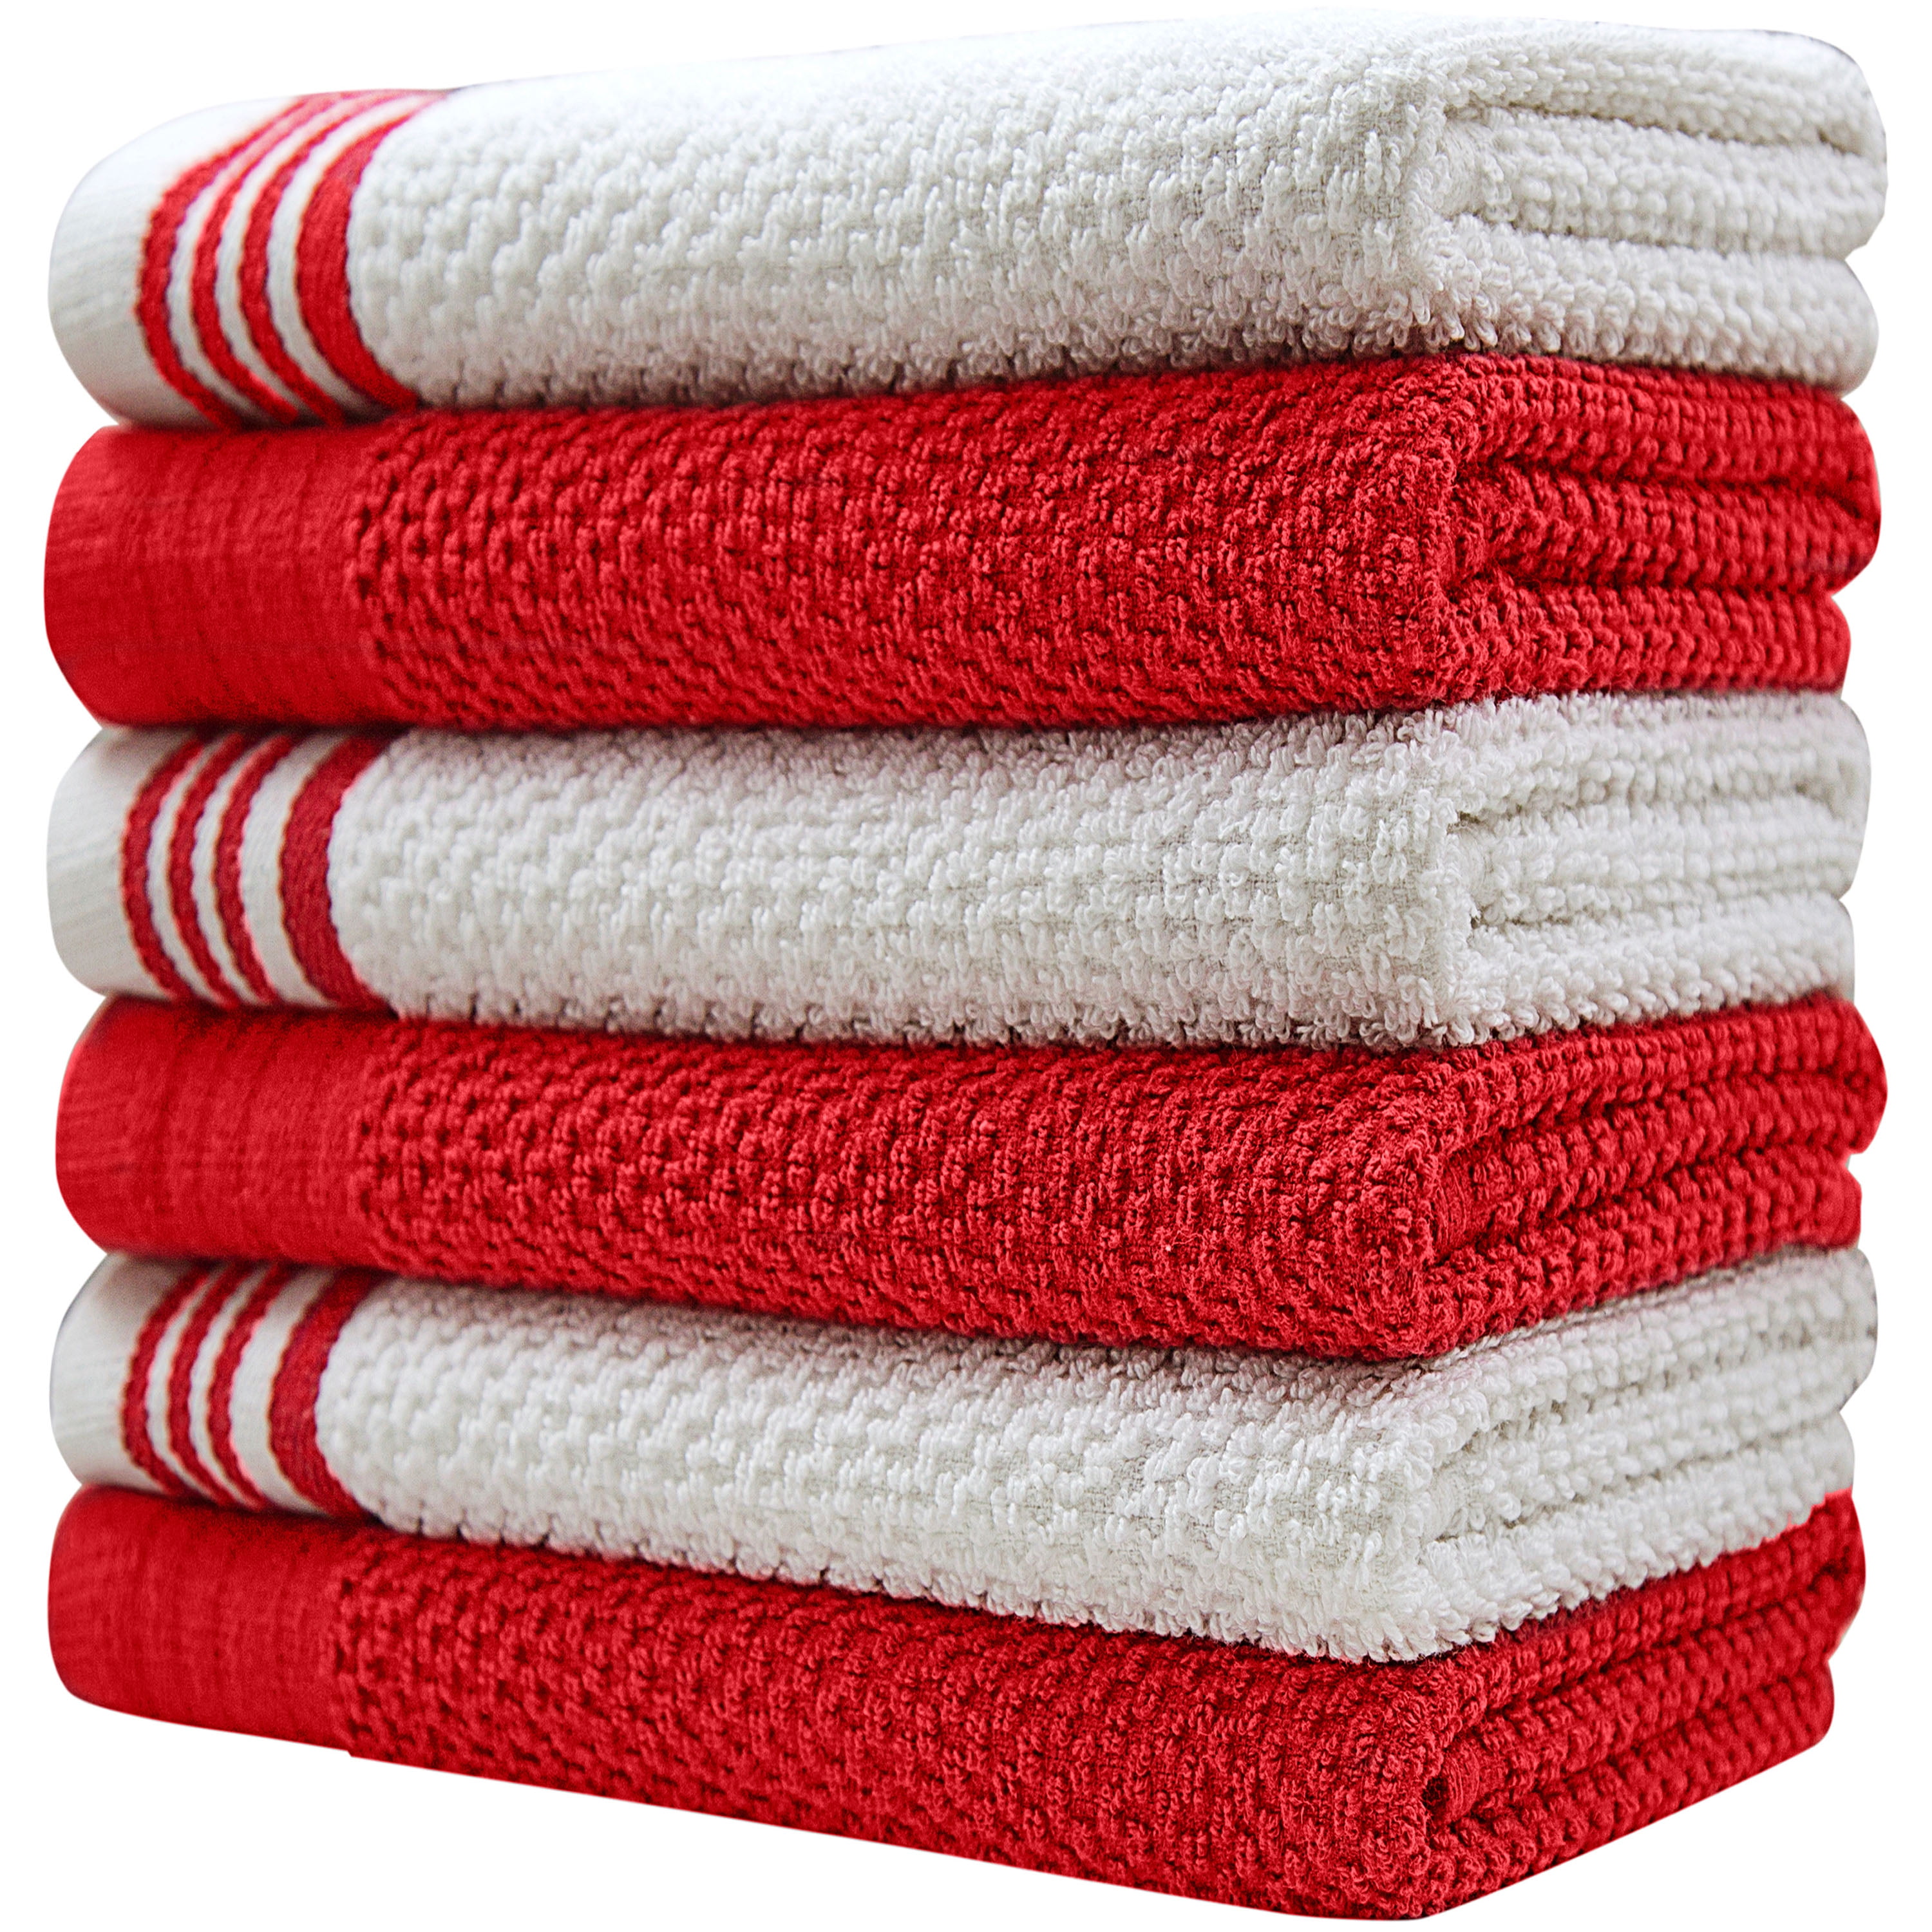 Details about   Hand Towel 1Pc 100% Cotton Towel For Adult Plaid Towel Face Care Plaid Towel New 